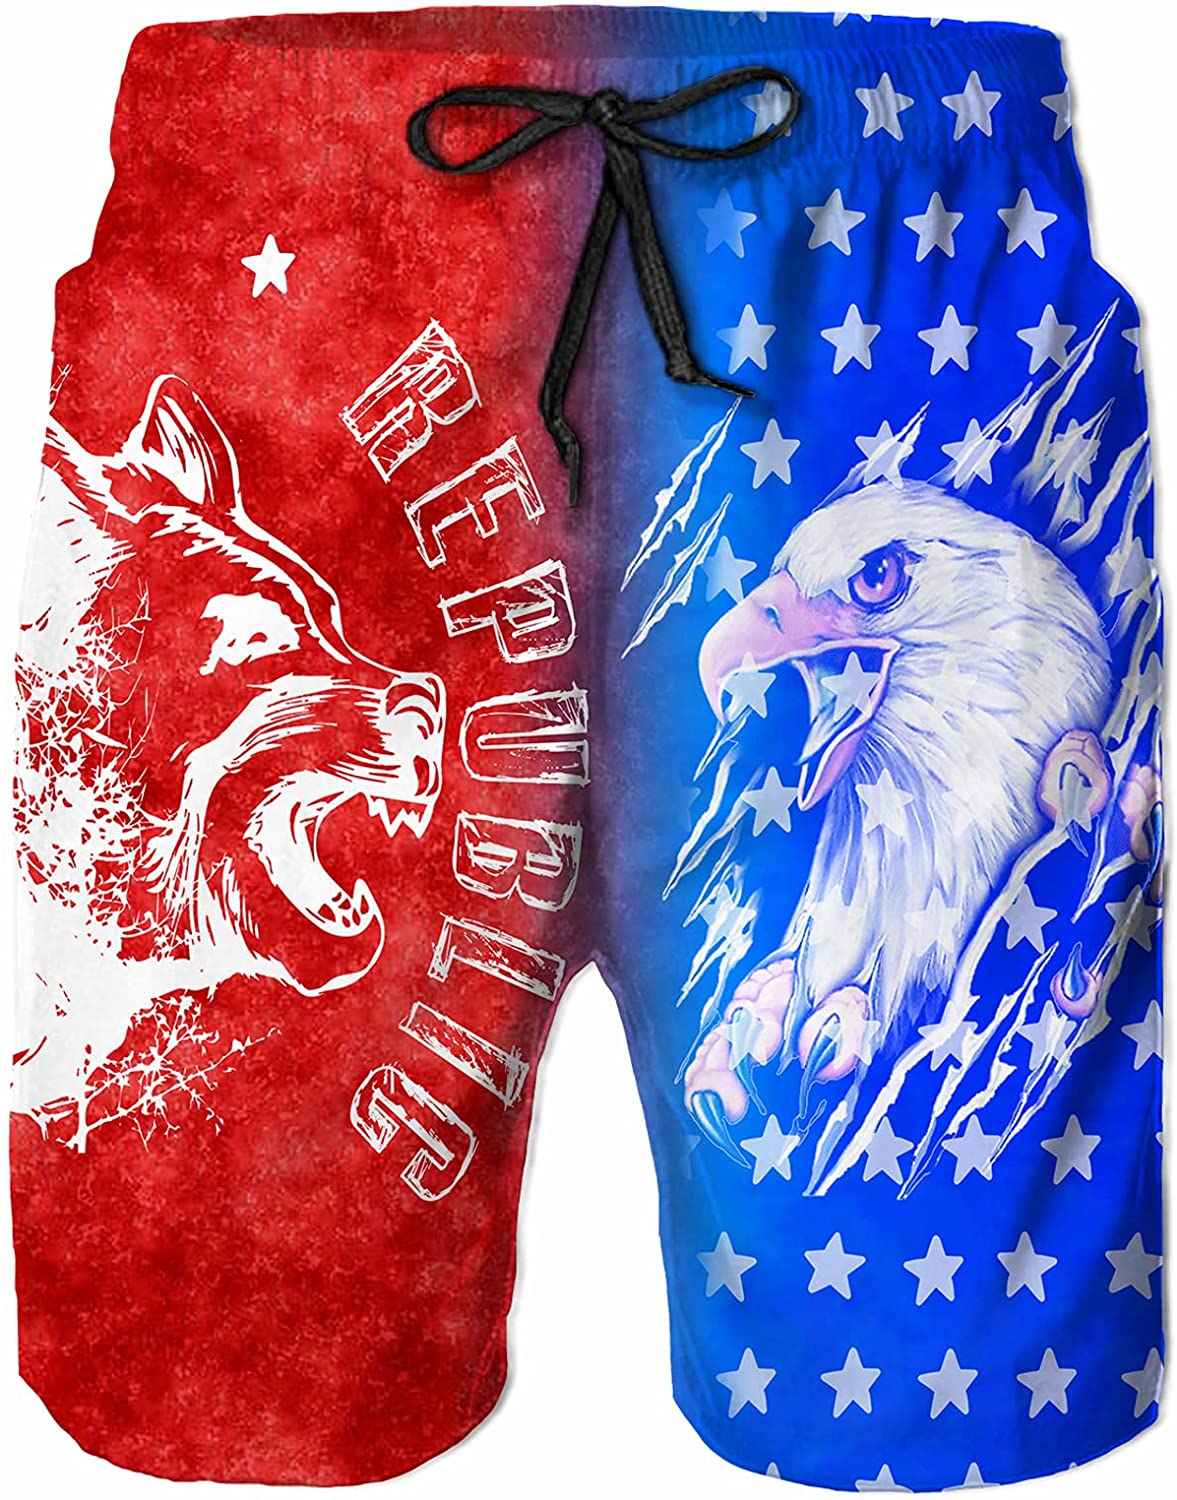 HZamora_H Men Bear Wearing American Flag Summer Breathable Quick-Drying Swim Trunks Beach Shorts Board Shorts